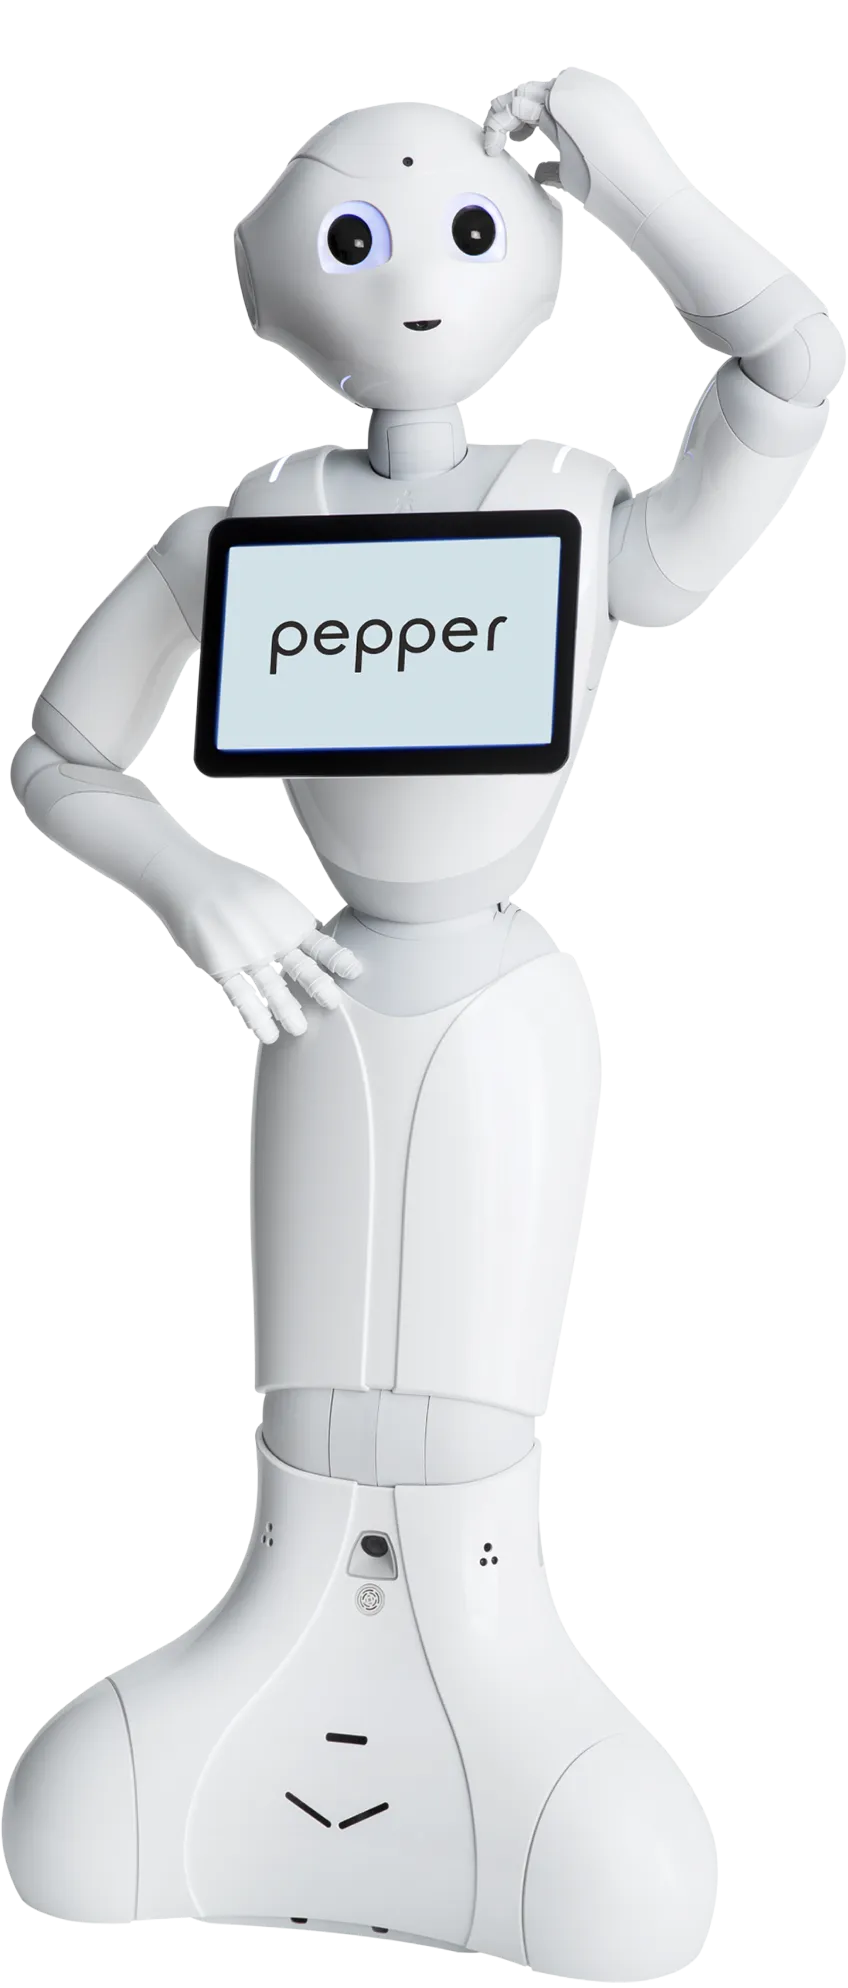 PEPPER robot - Front side